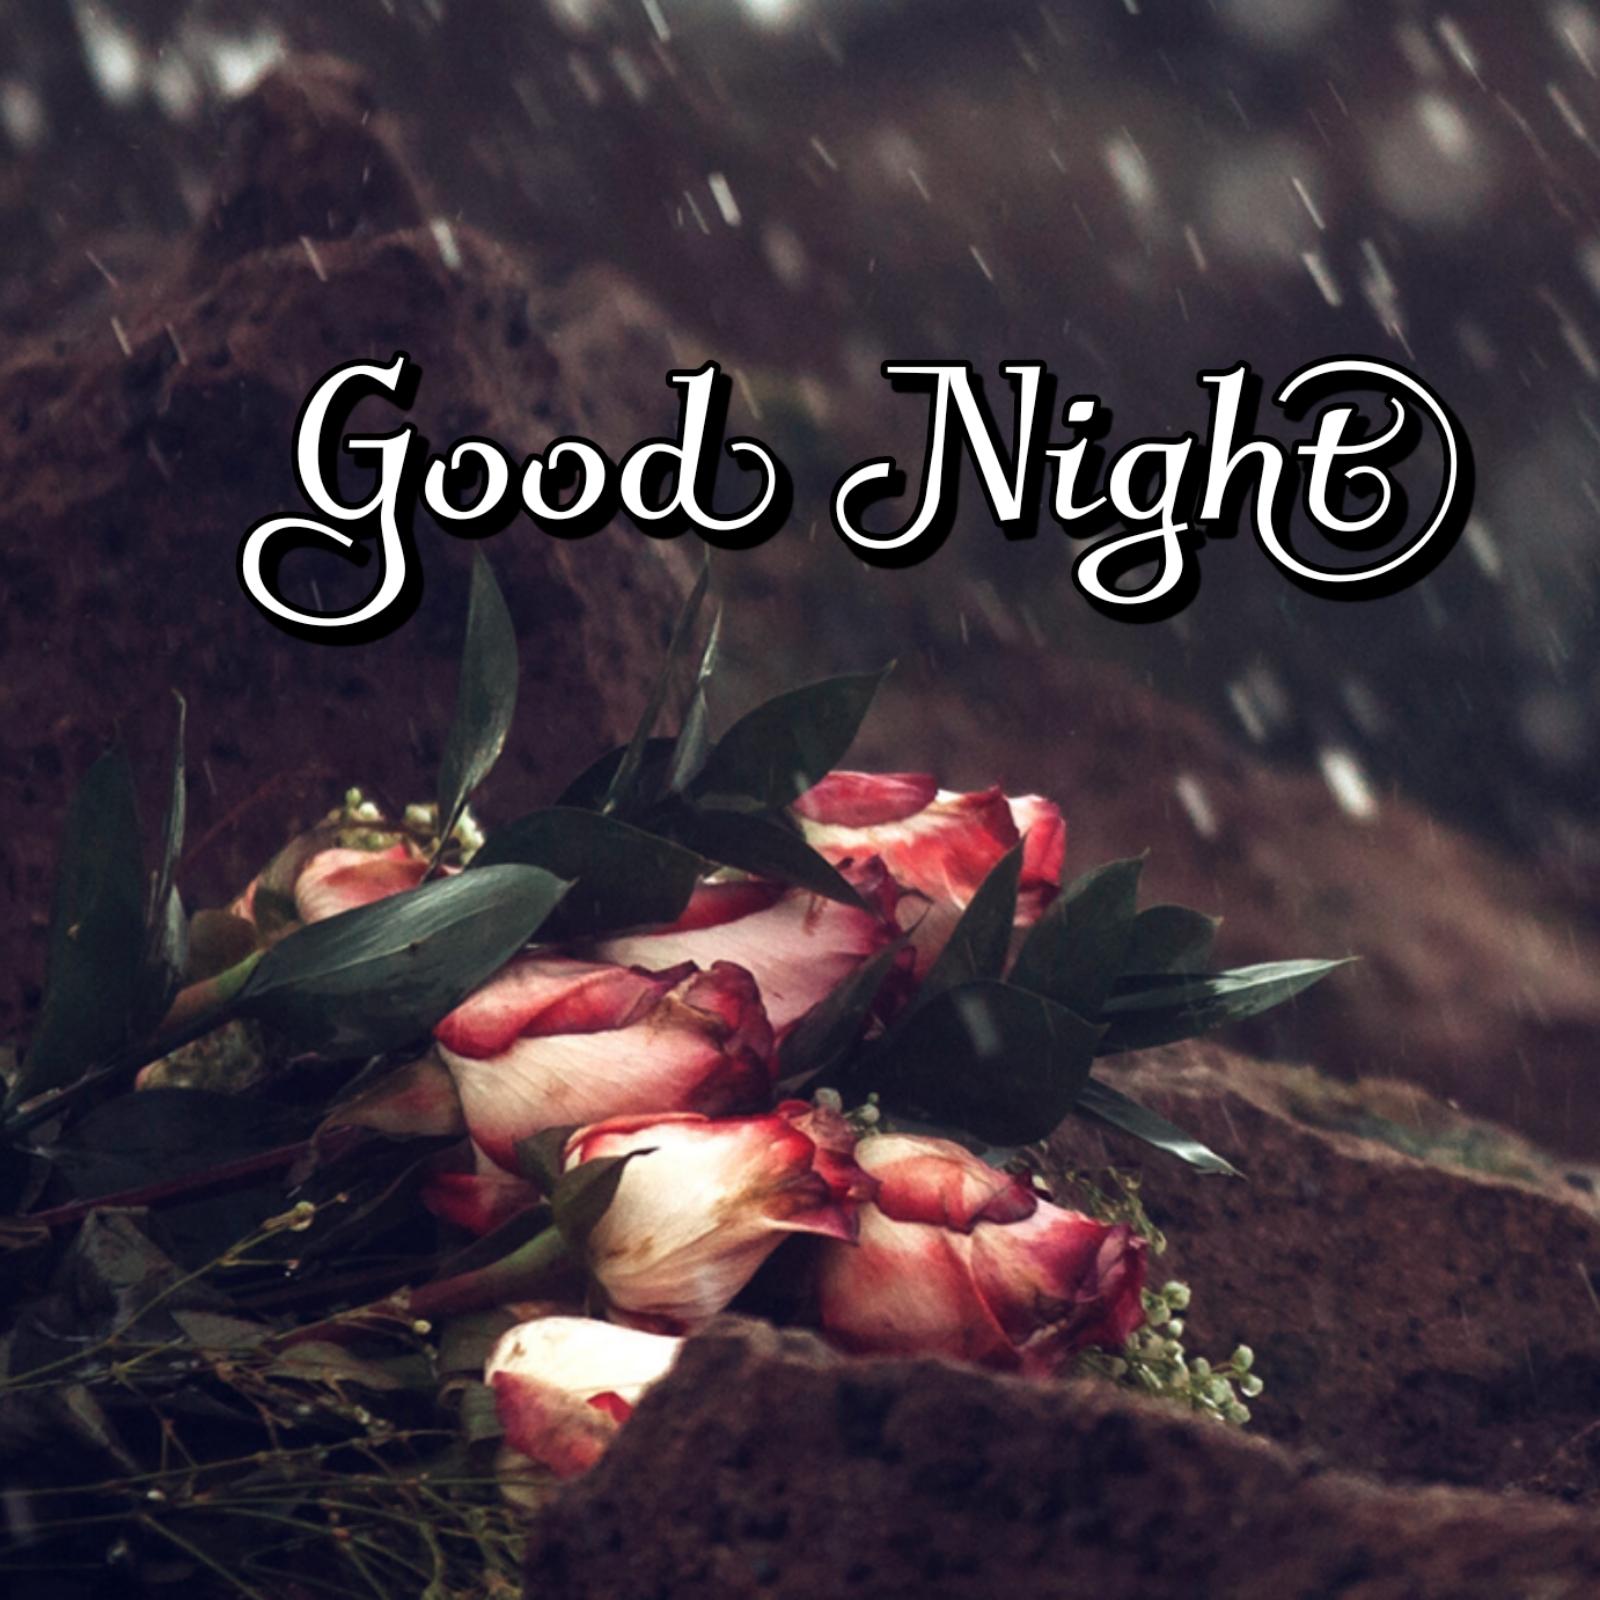 Good Night Images Rose